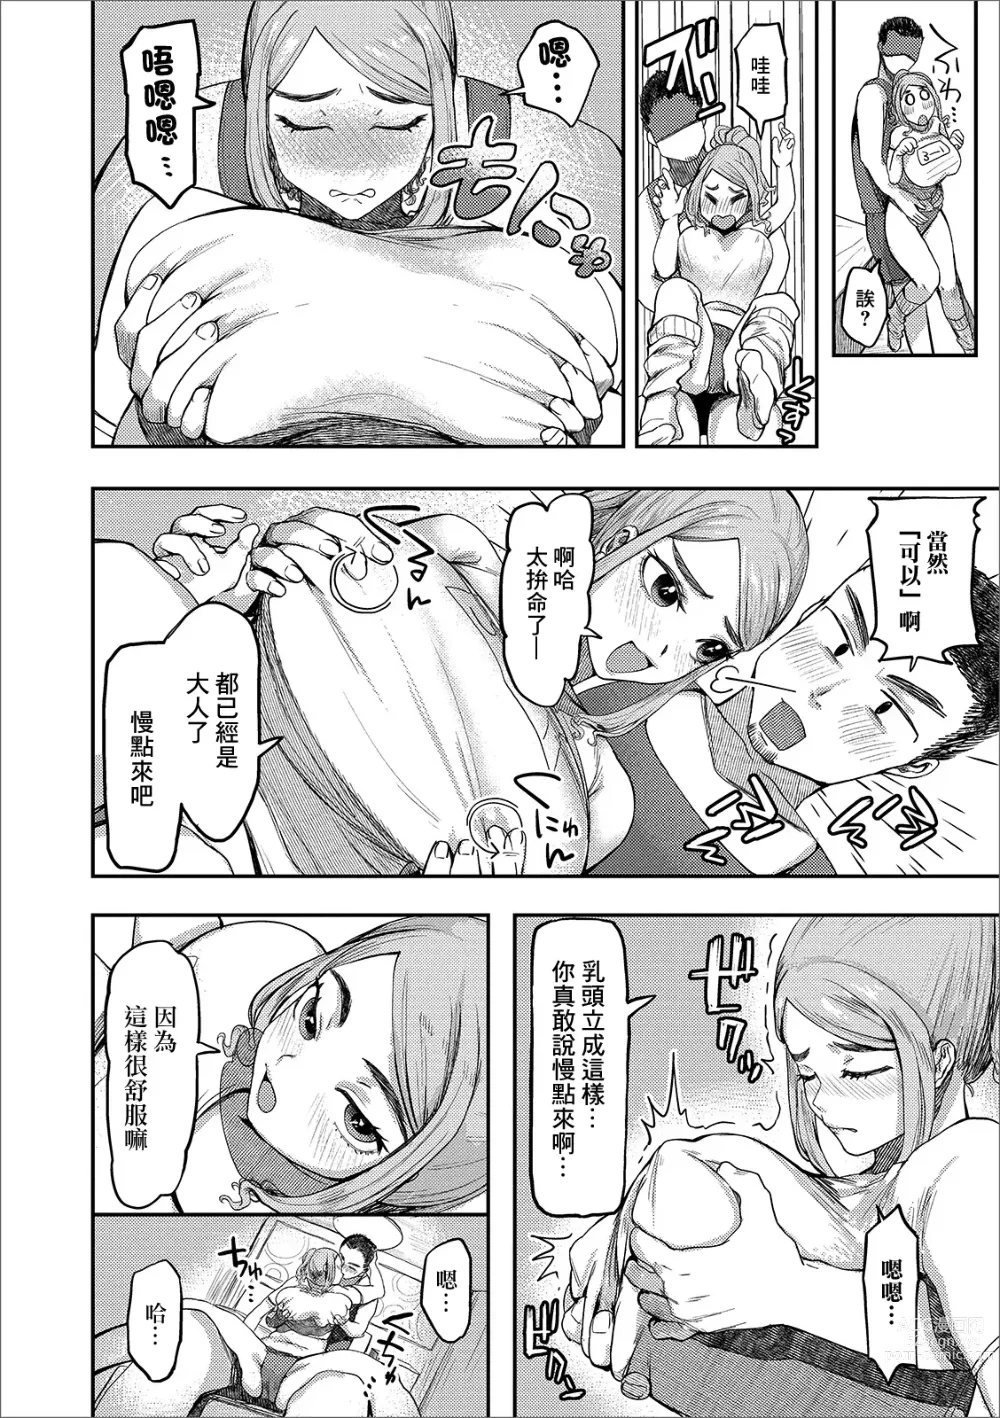 Page 4 of manga Dousoukai de Omochikaeri!